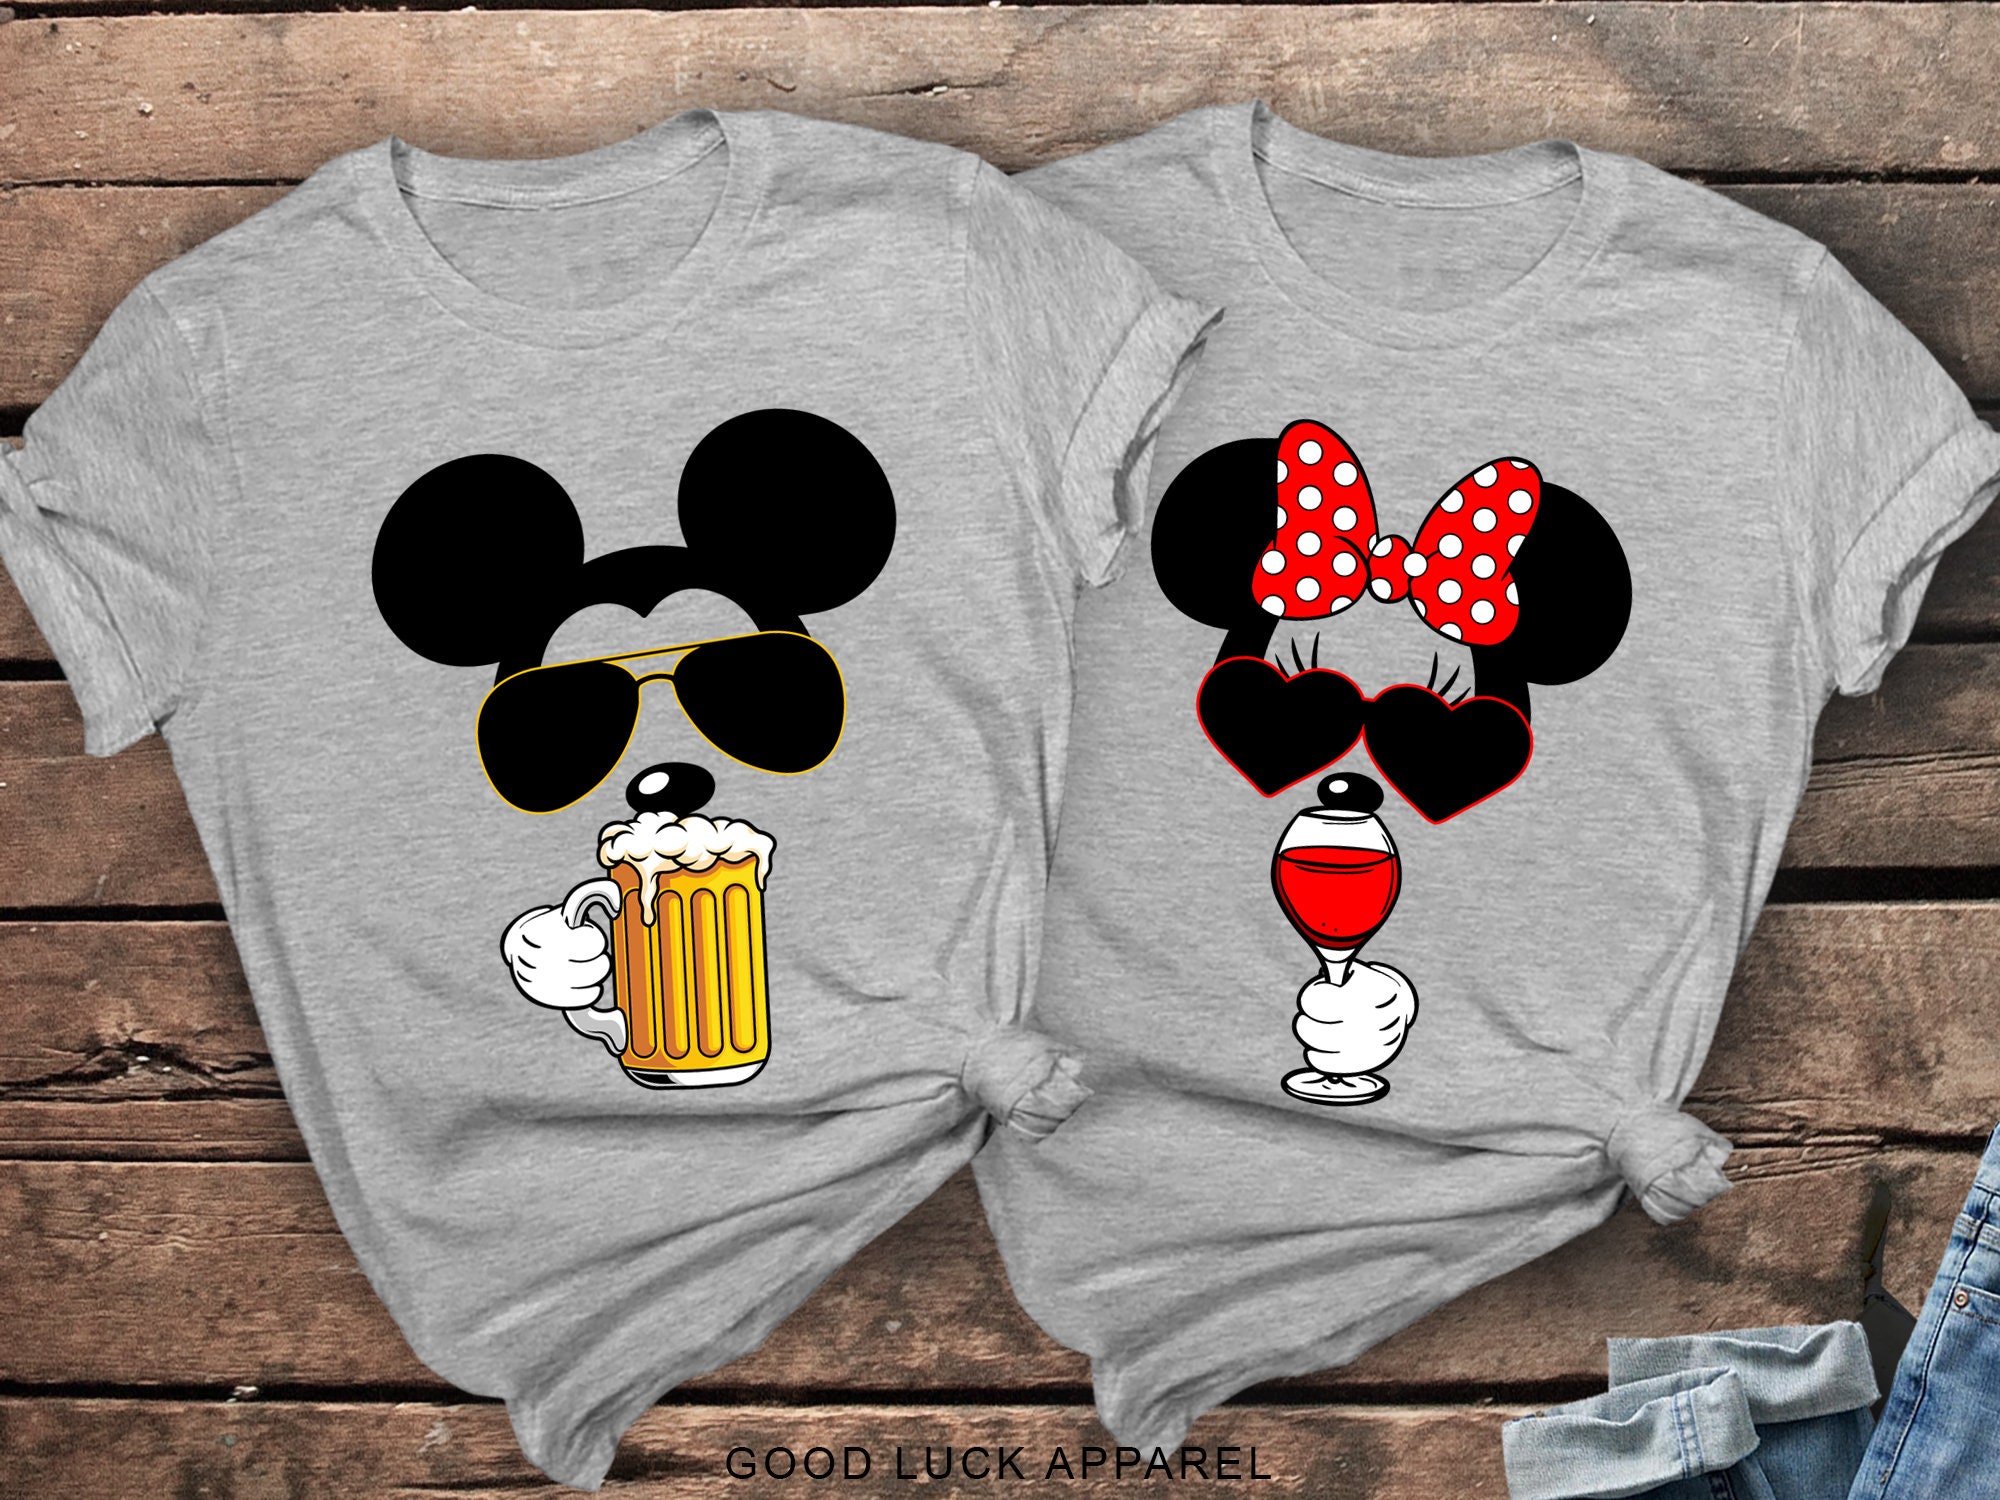 Mickey and Minnie Drinking around Shirts, Drinking around the world Epcot shirts